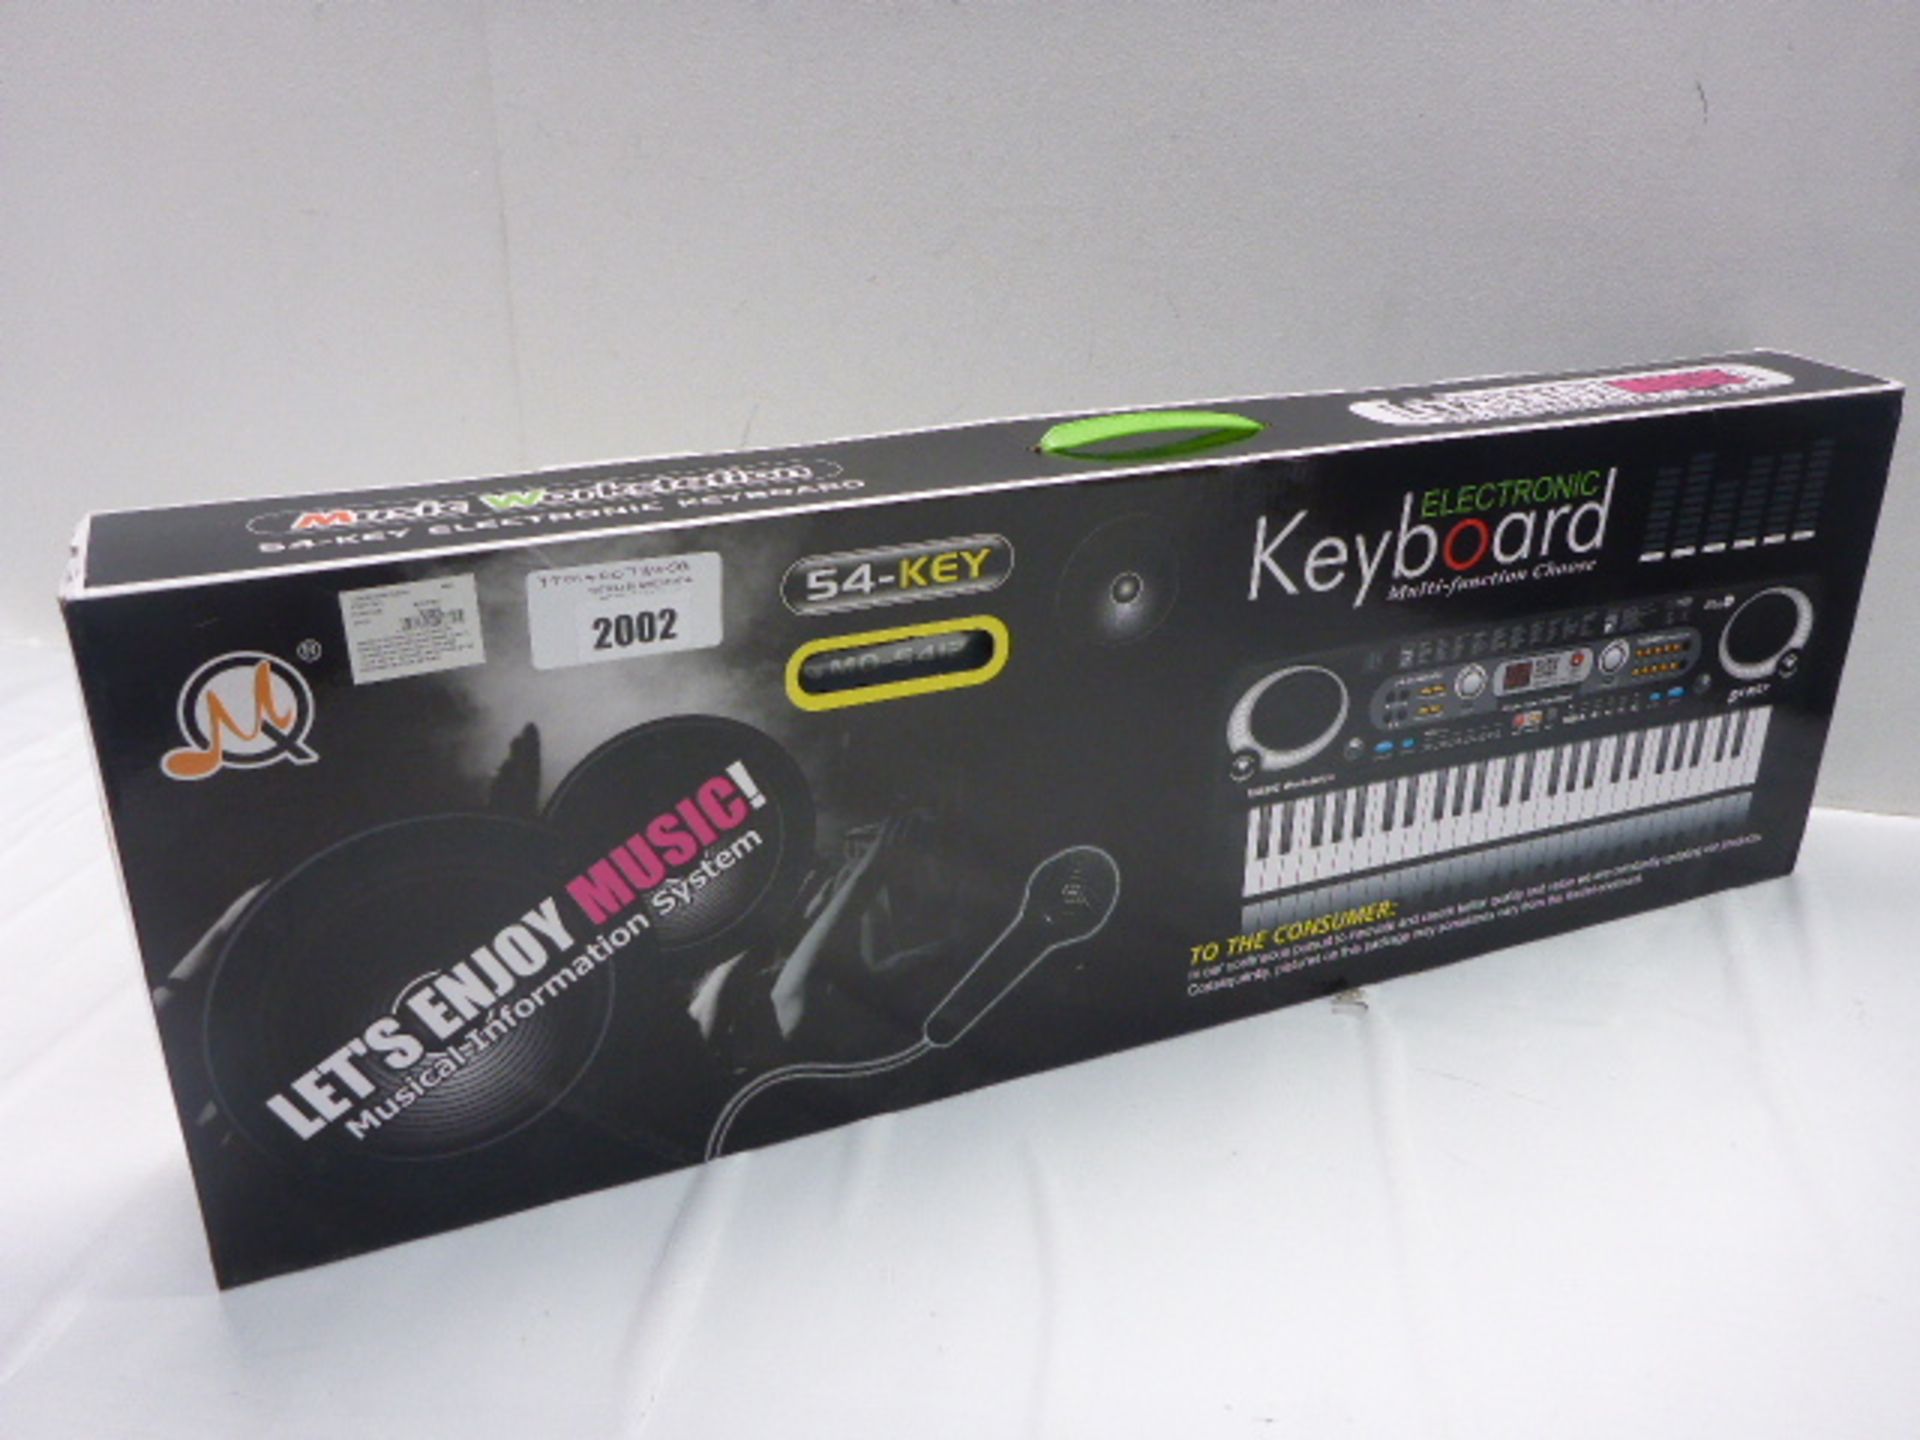 Electronic Keyboard MQ-5412